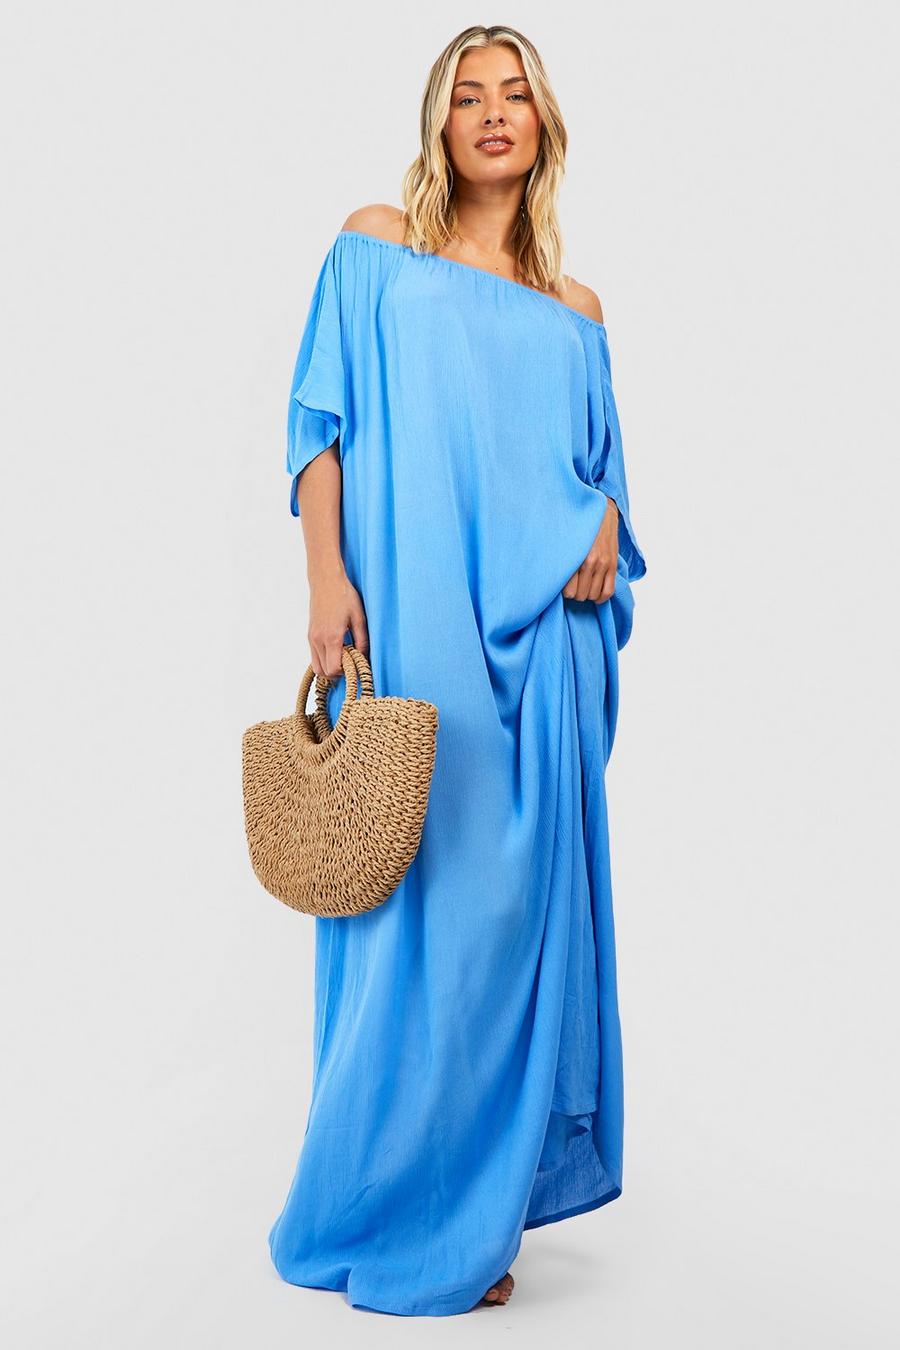 Blue Off The Shoulder Beach Maxi Dress